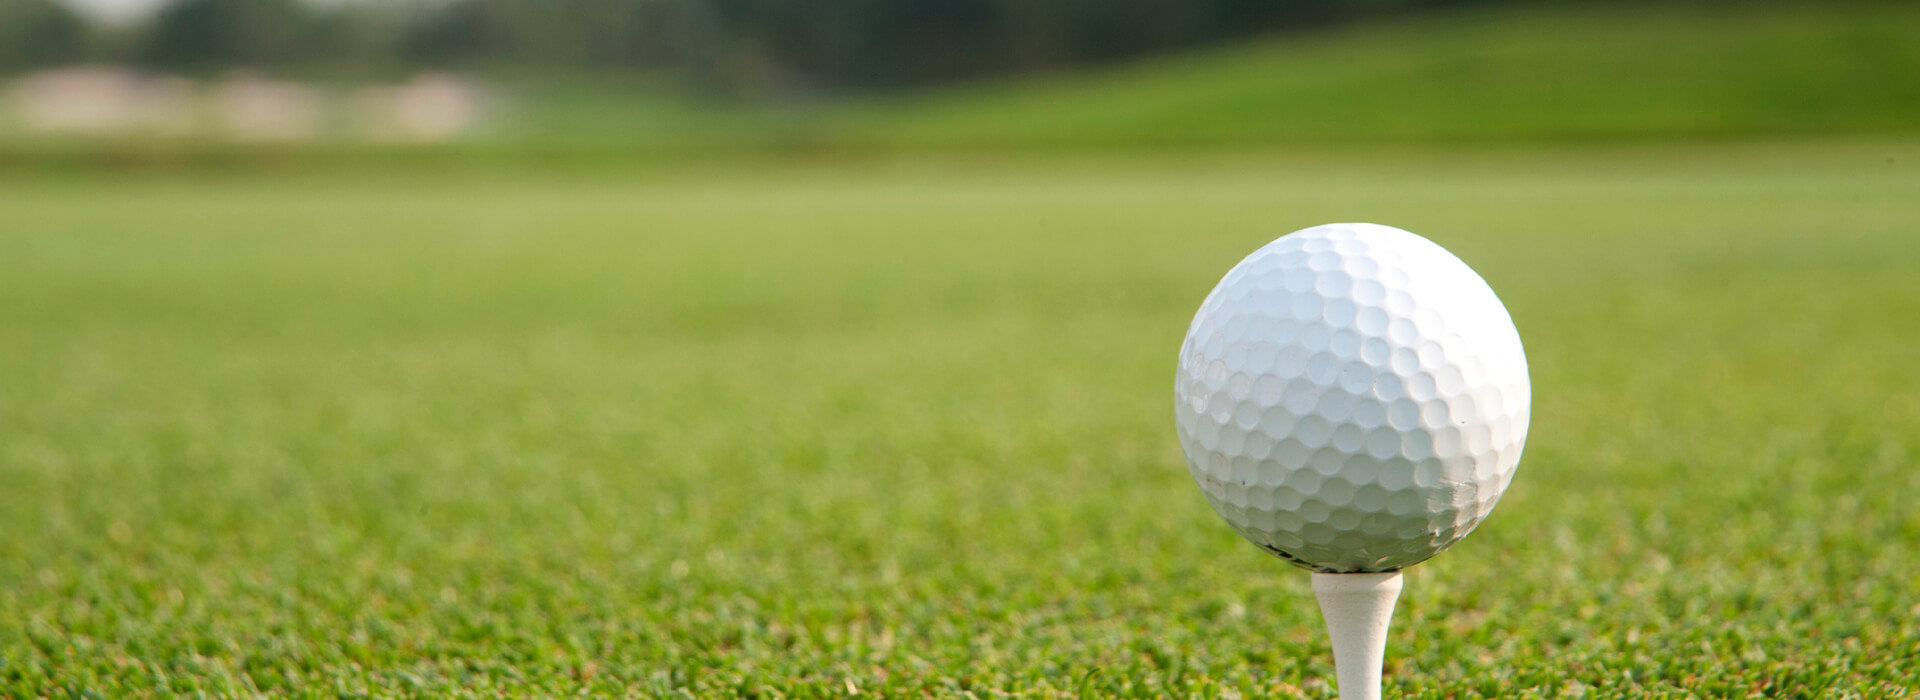 Golf Detail Golfplatz mit Golfball